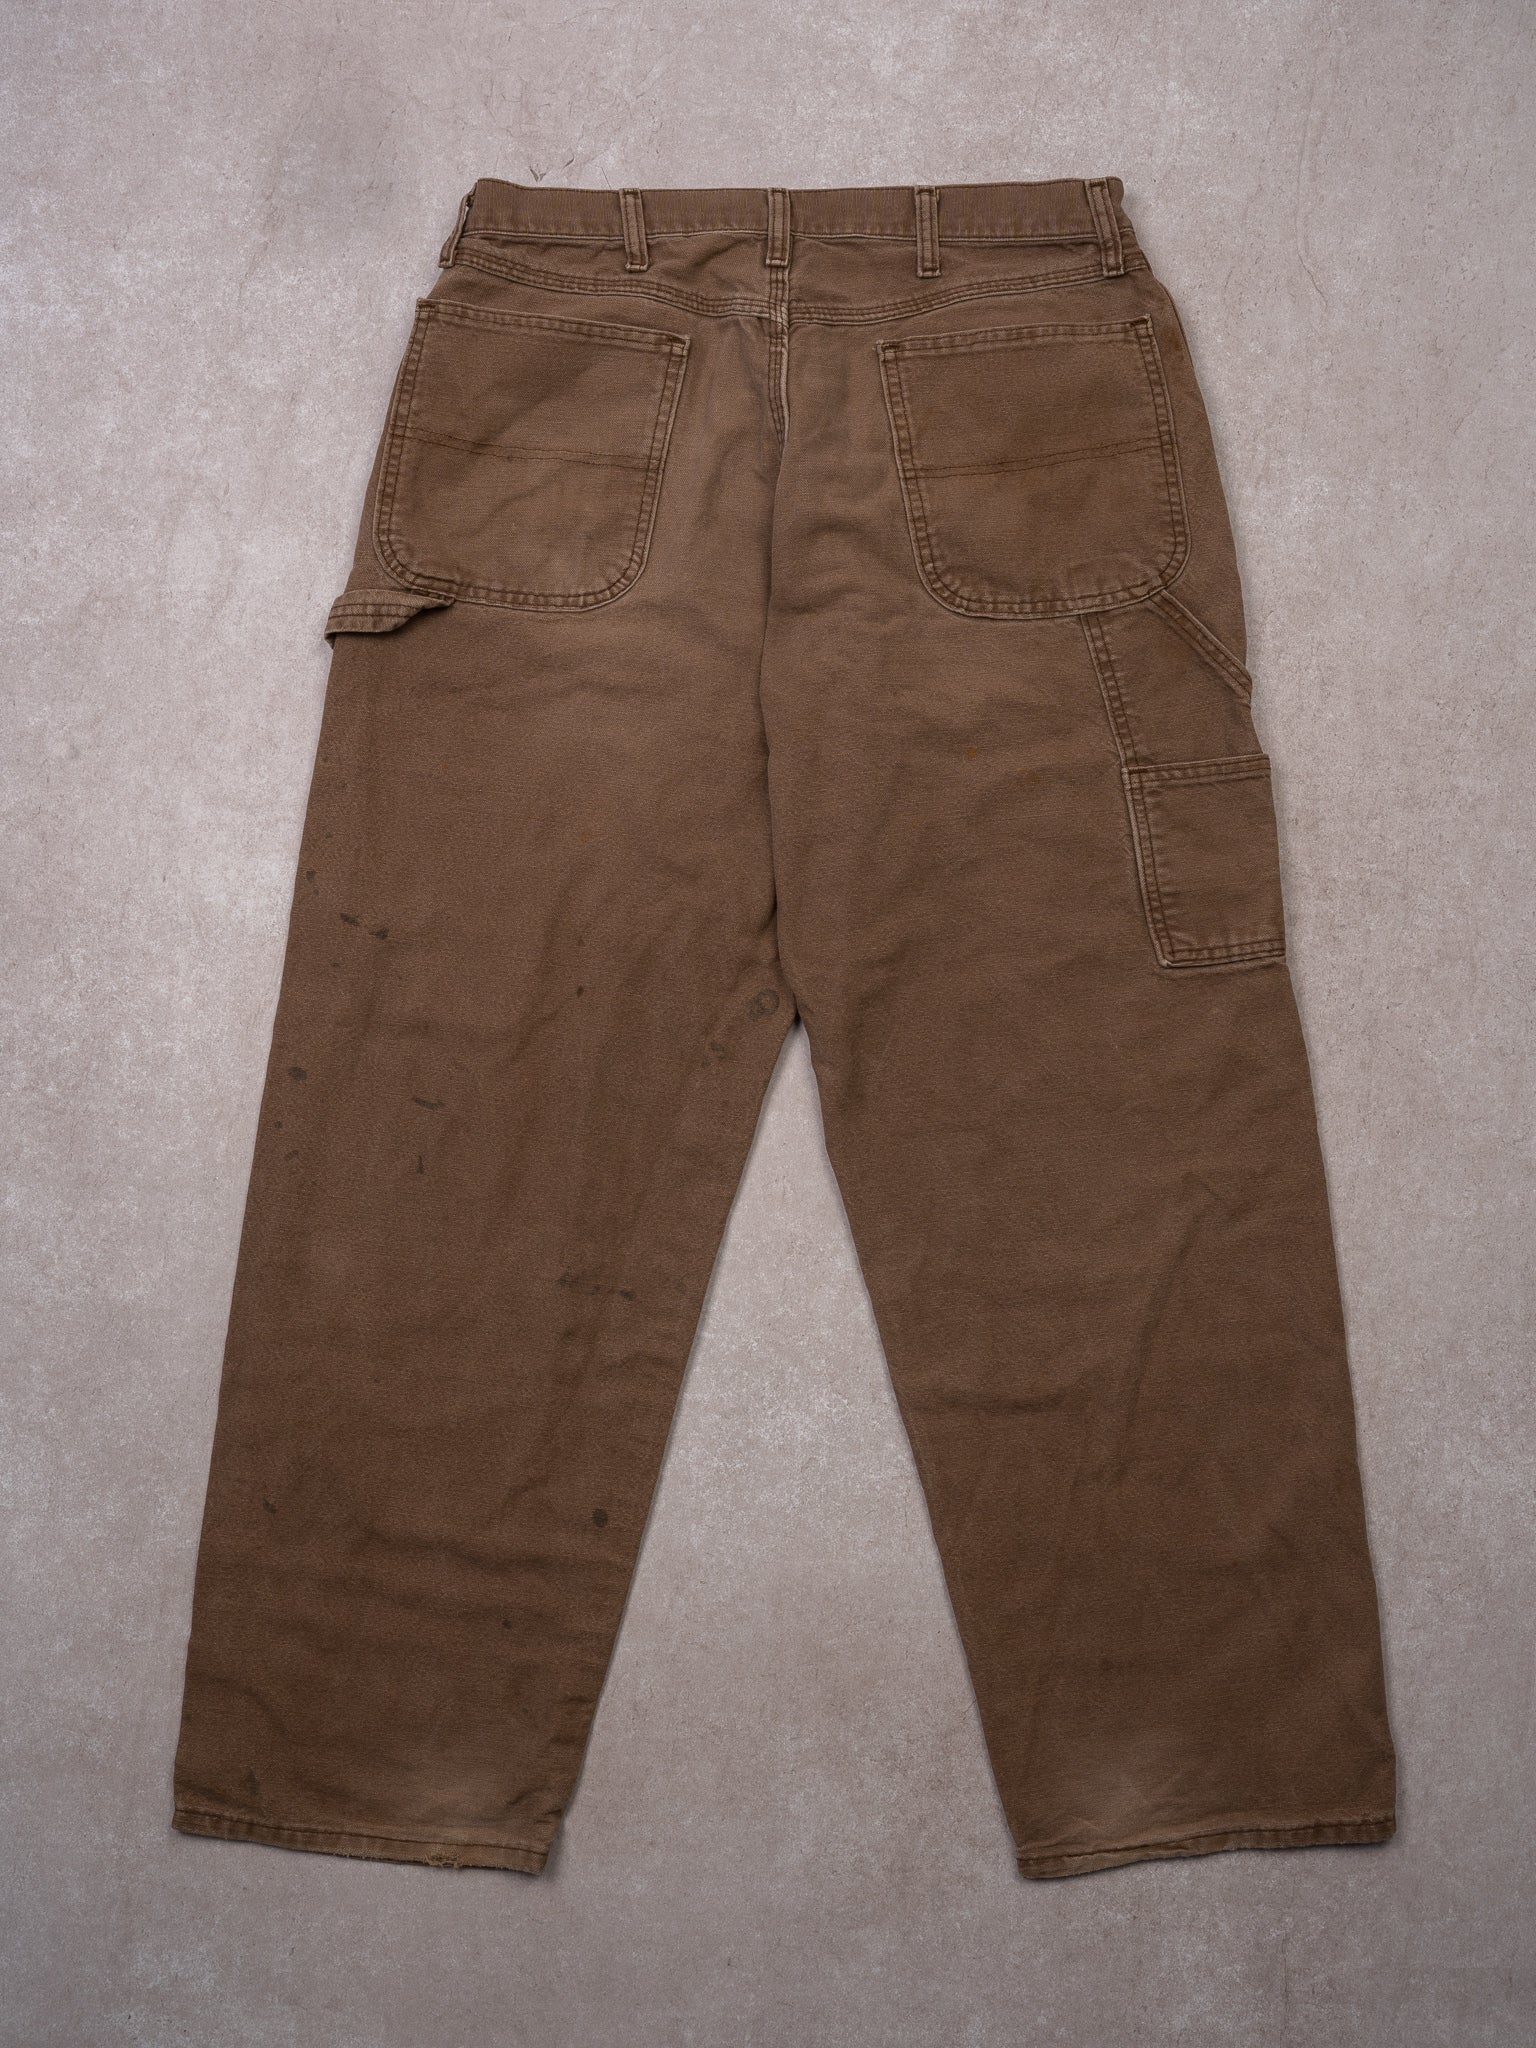 Vintage Washed Brown Rustler Denim Cargo Pants (32 x 30)